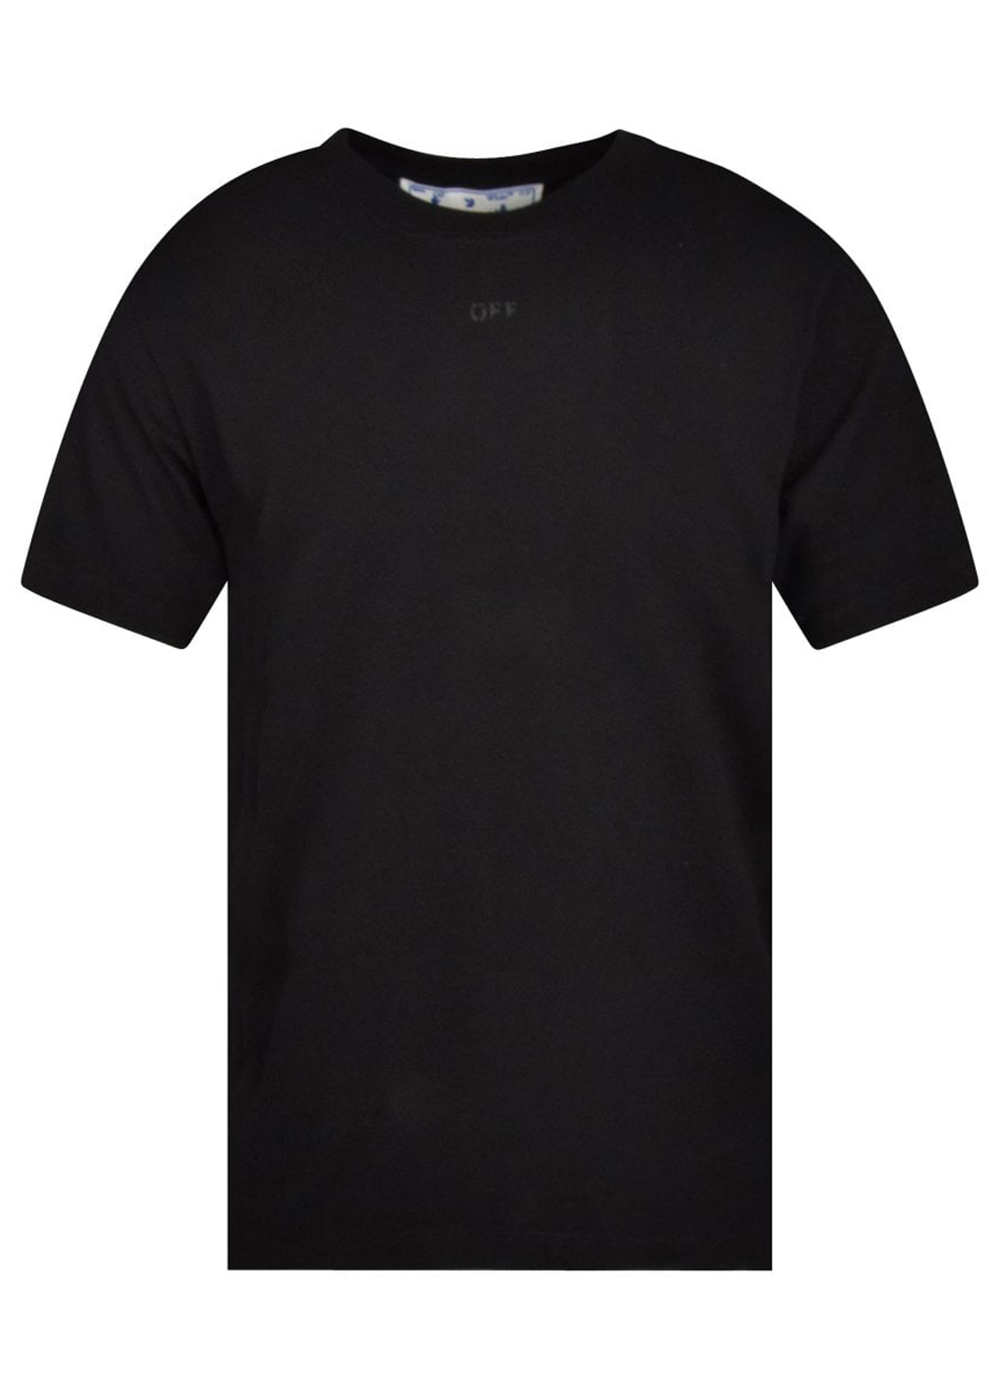 OFF-WHITE Rubber Arrows Slim Fit T-Shirt Black/Black Men's - FW21 - GB